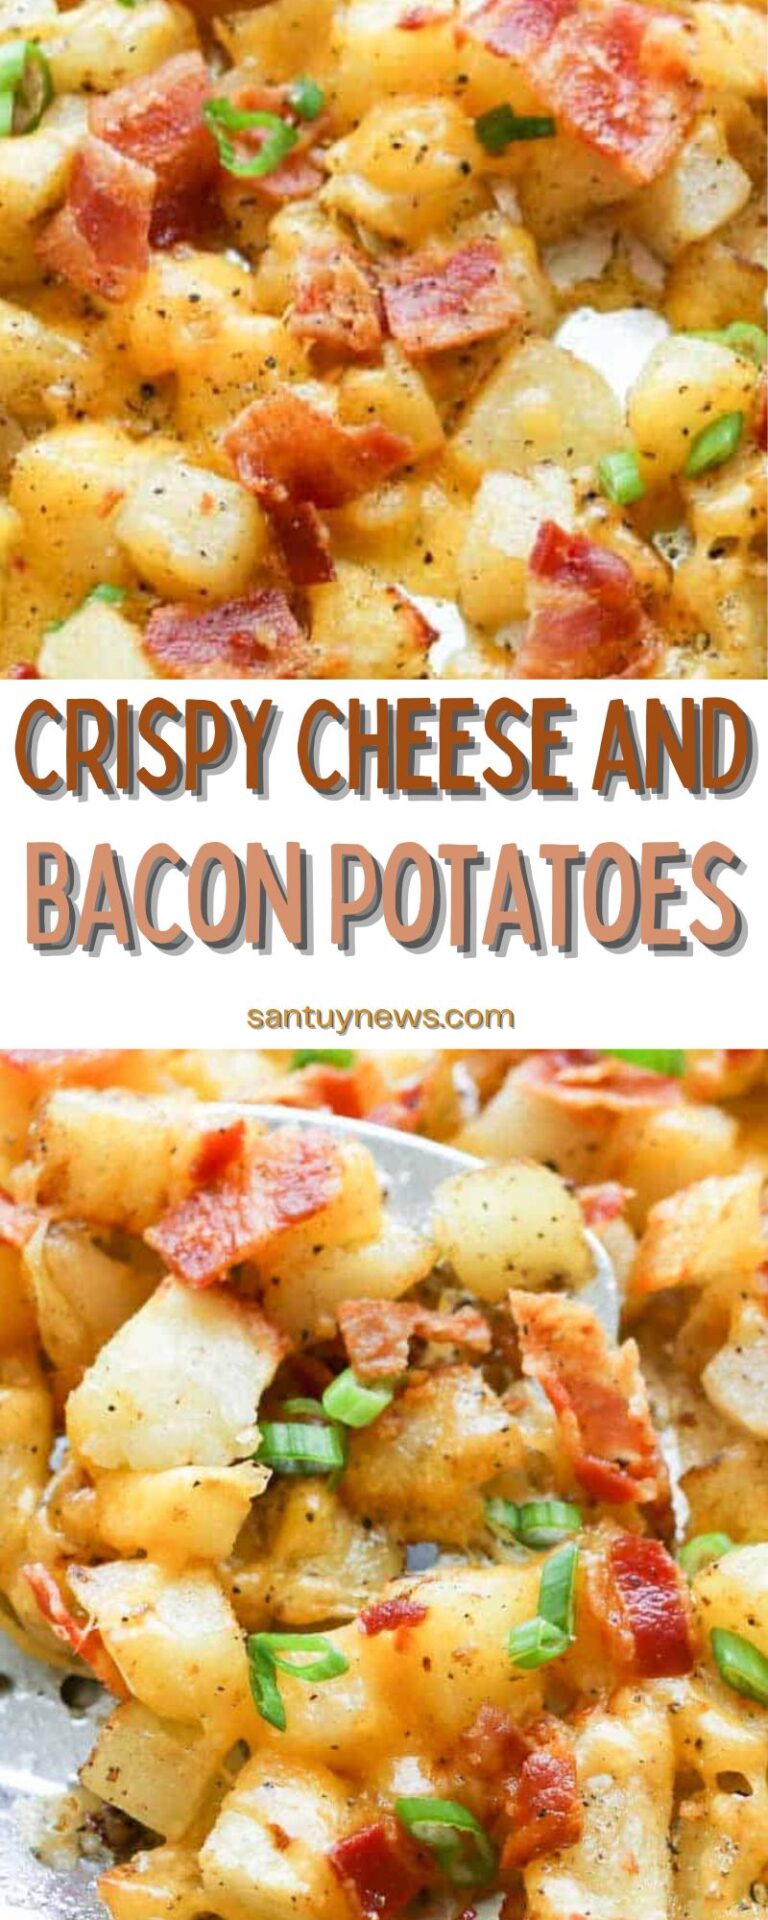 Crispy Cheese and Bacon Potatoes – SANTUYNEWS